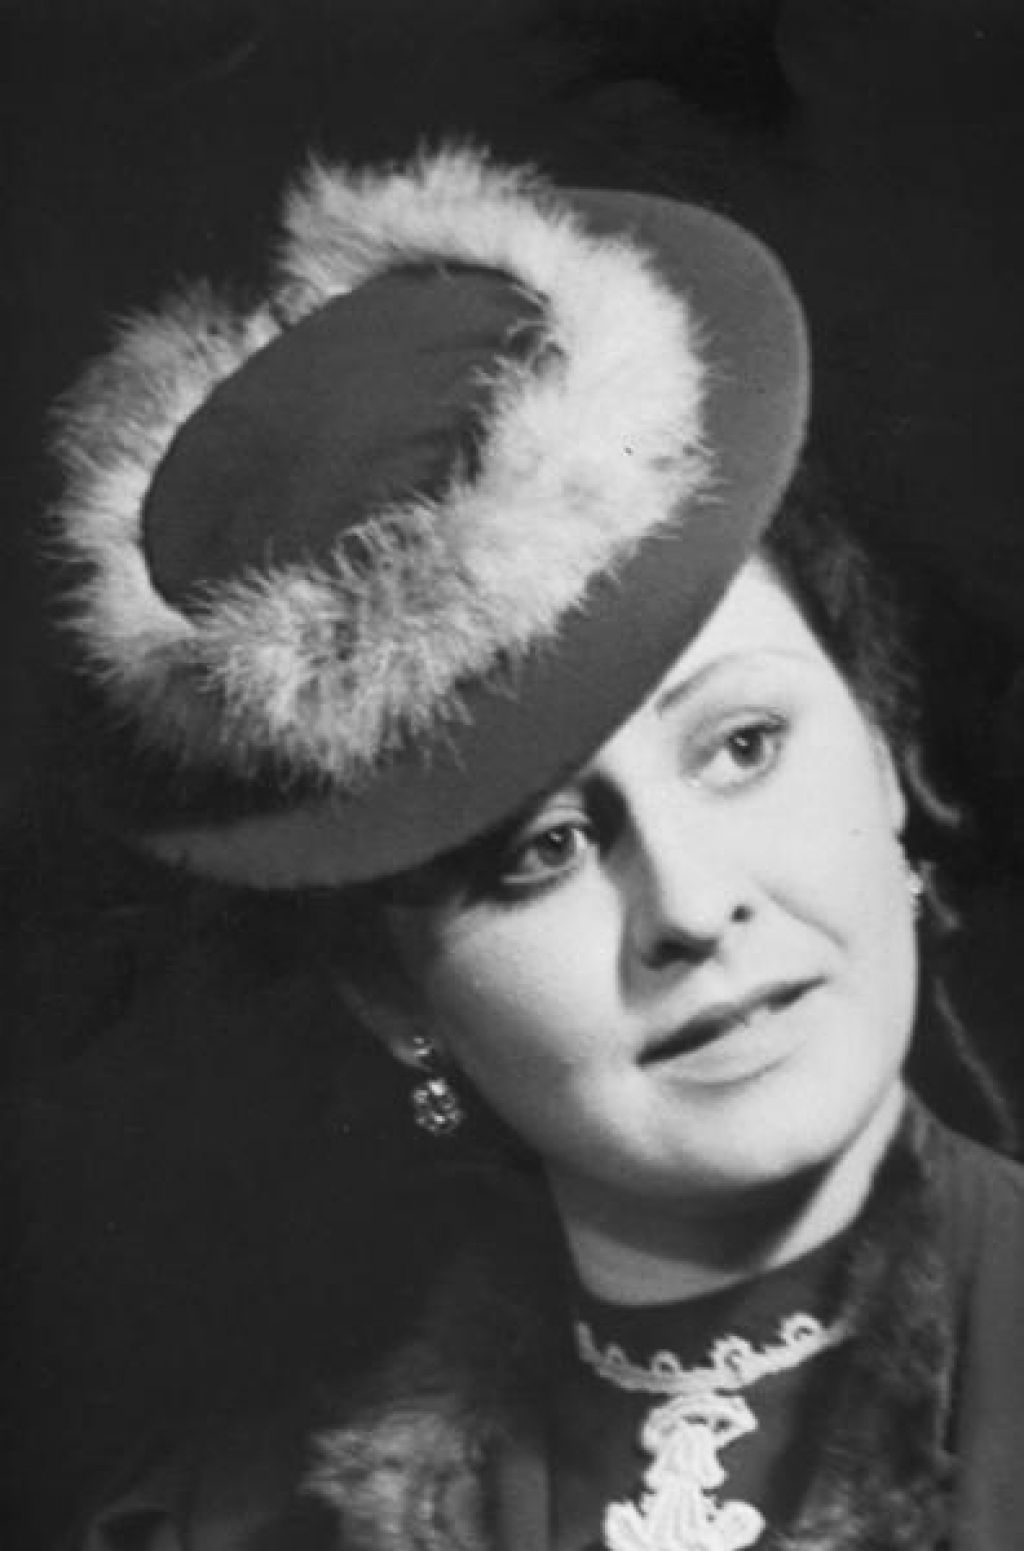 Umrla je sopranistka Sena Jurinac